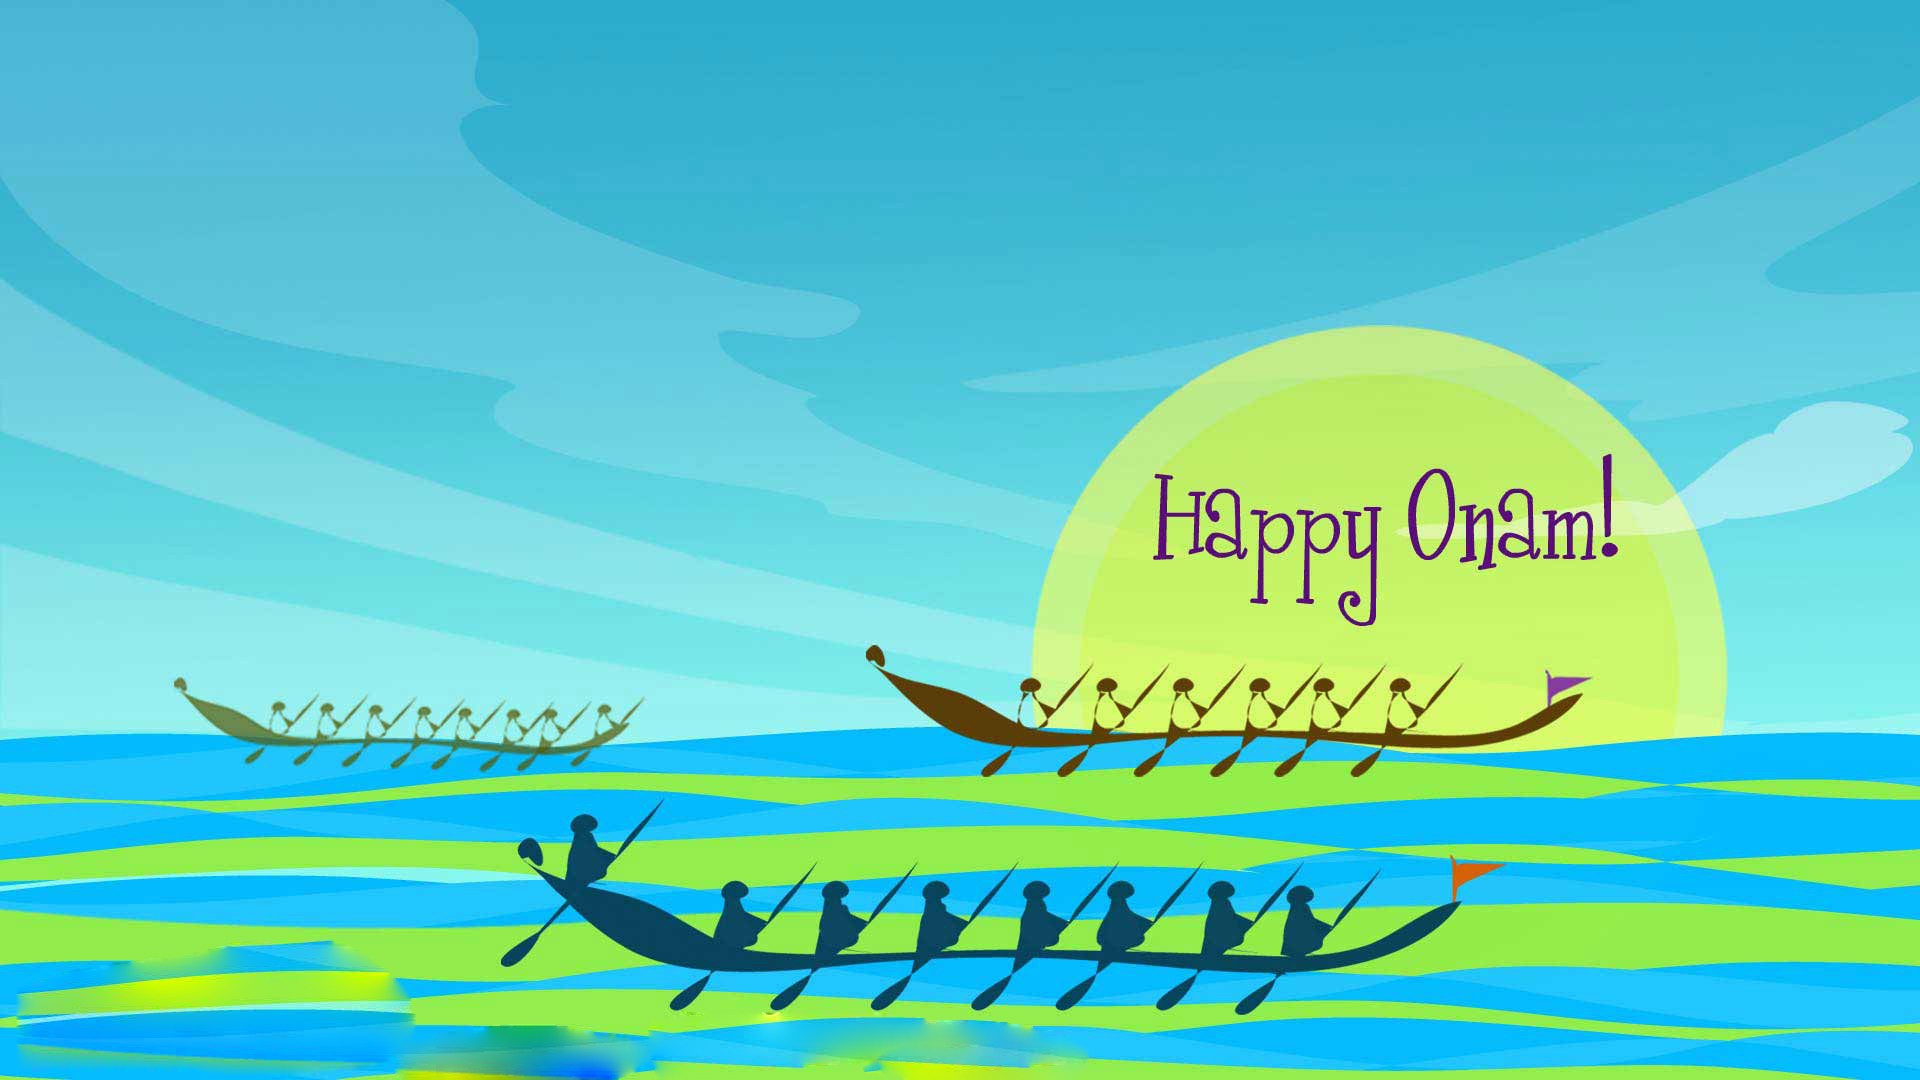 happy onam 2015 cards for facebook